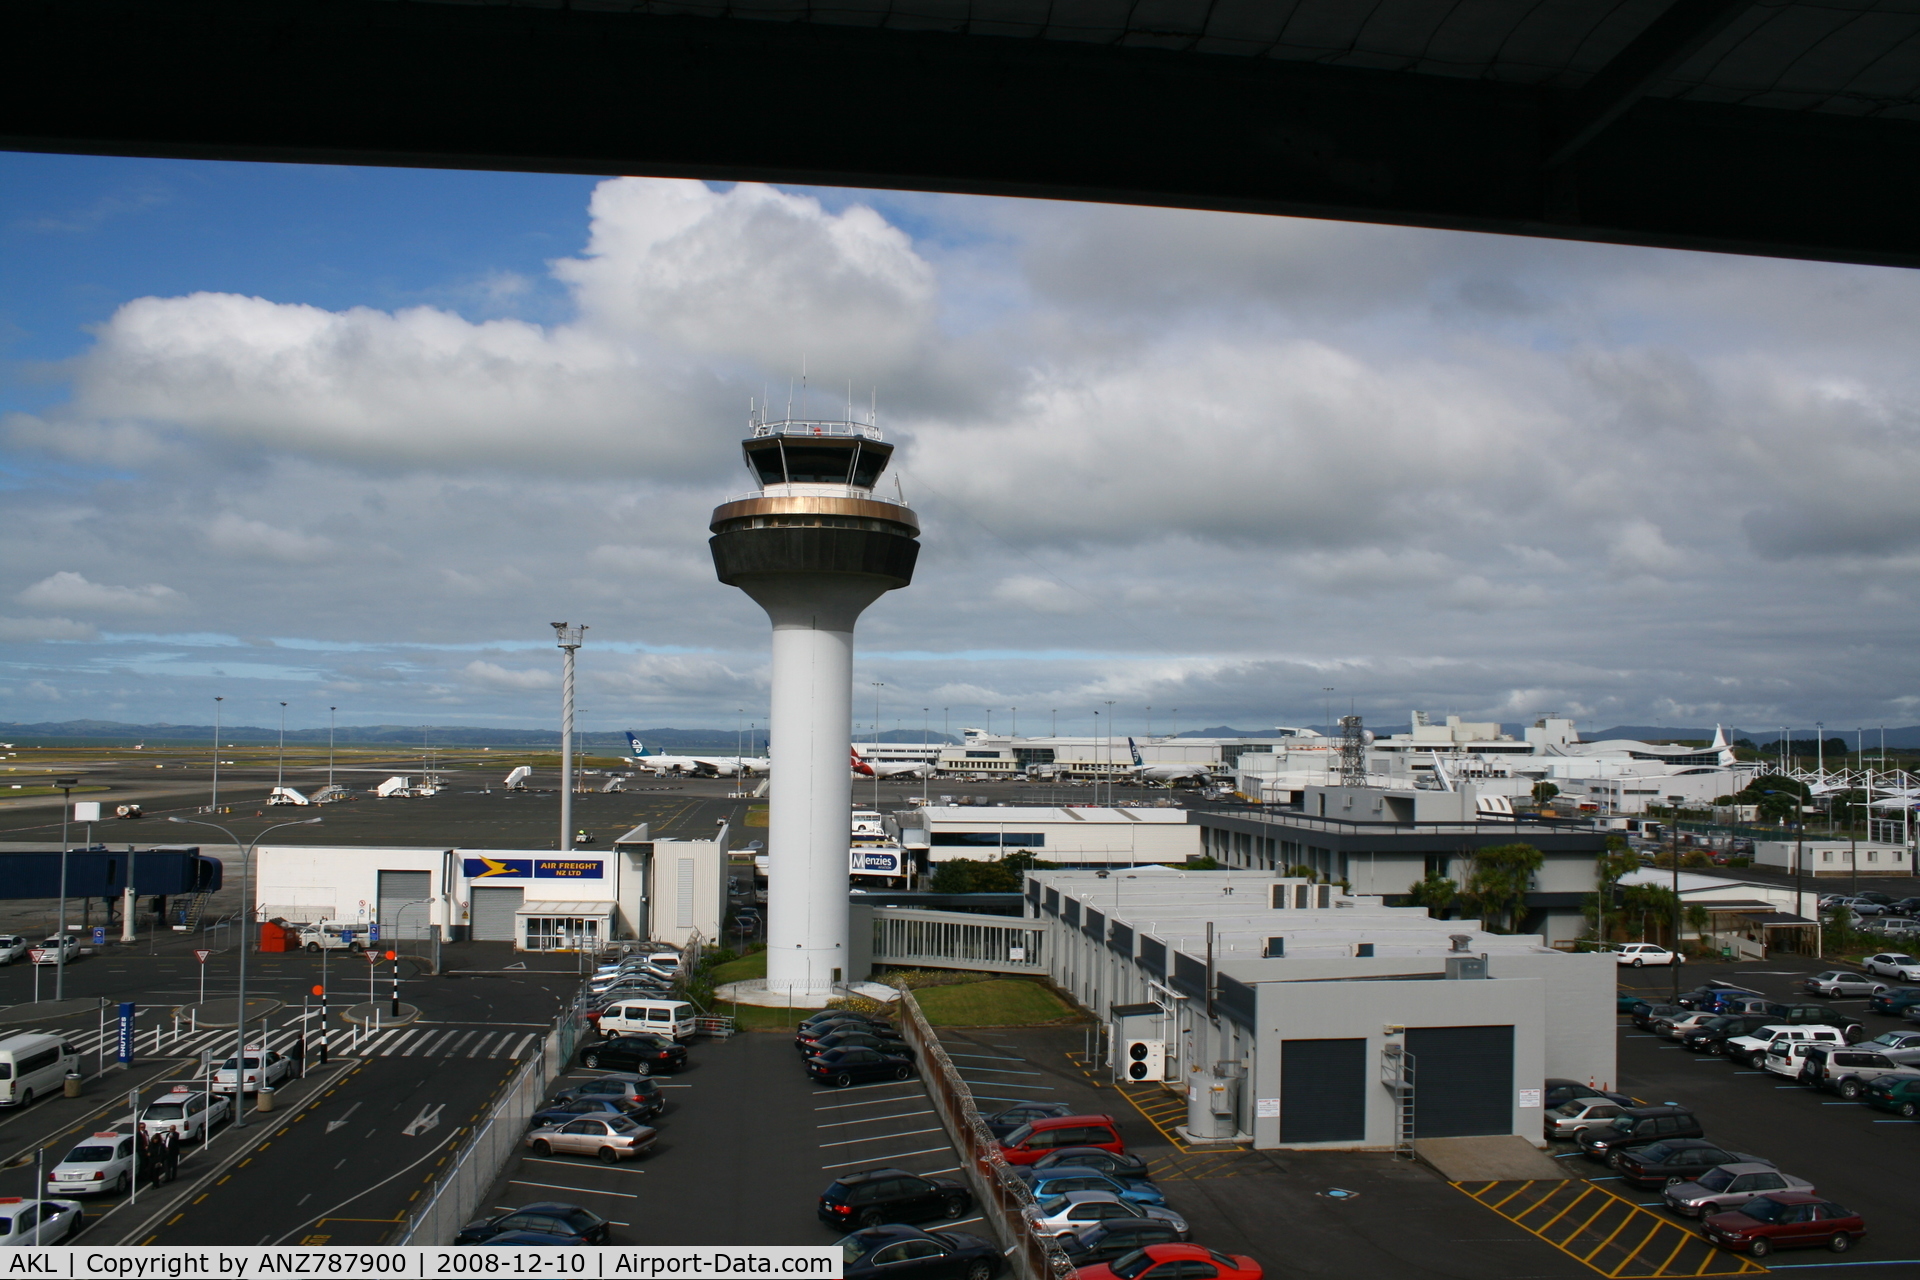 Auckland International Airport, Auckland New Zealand (AKL) - Looking towards the international terminal